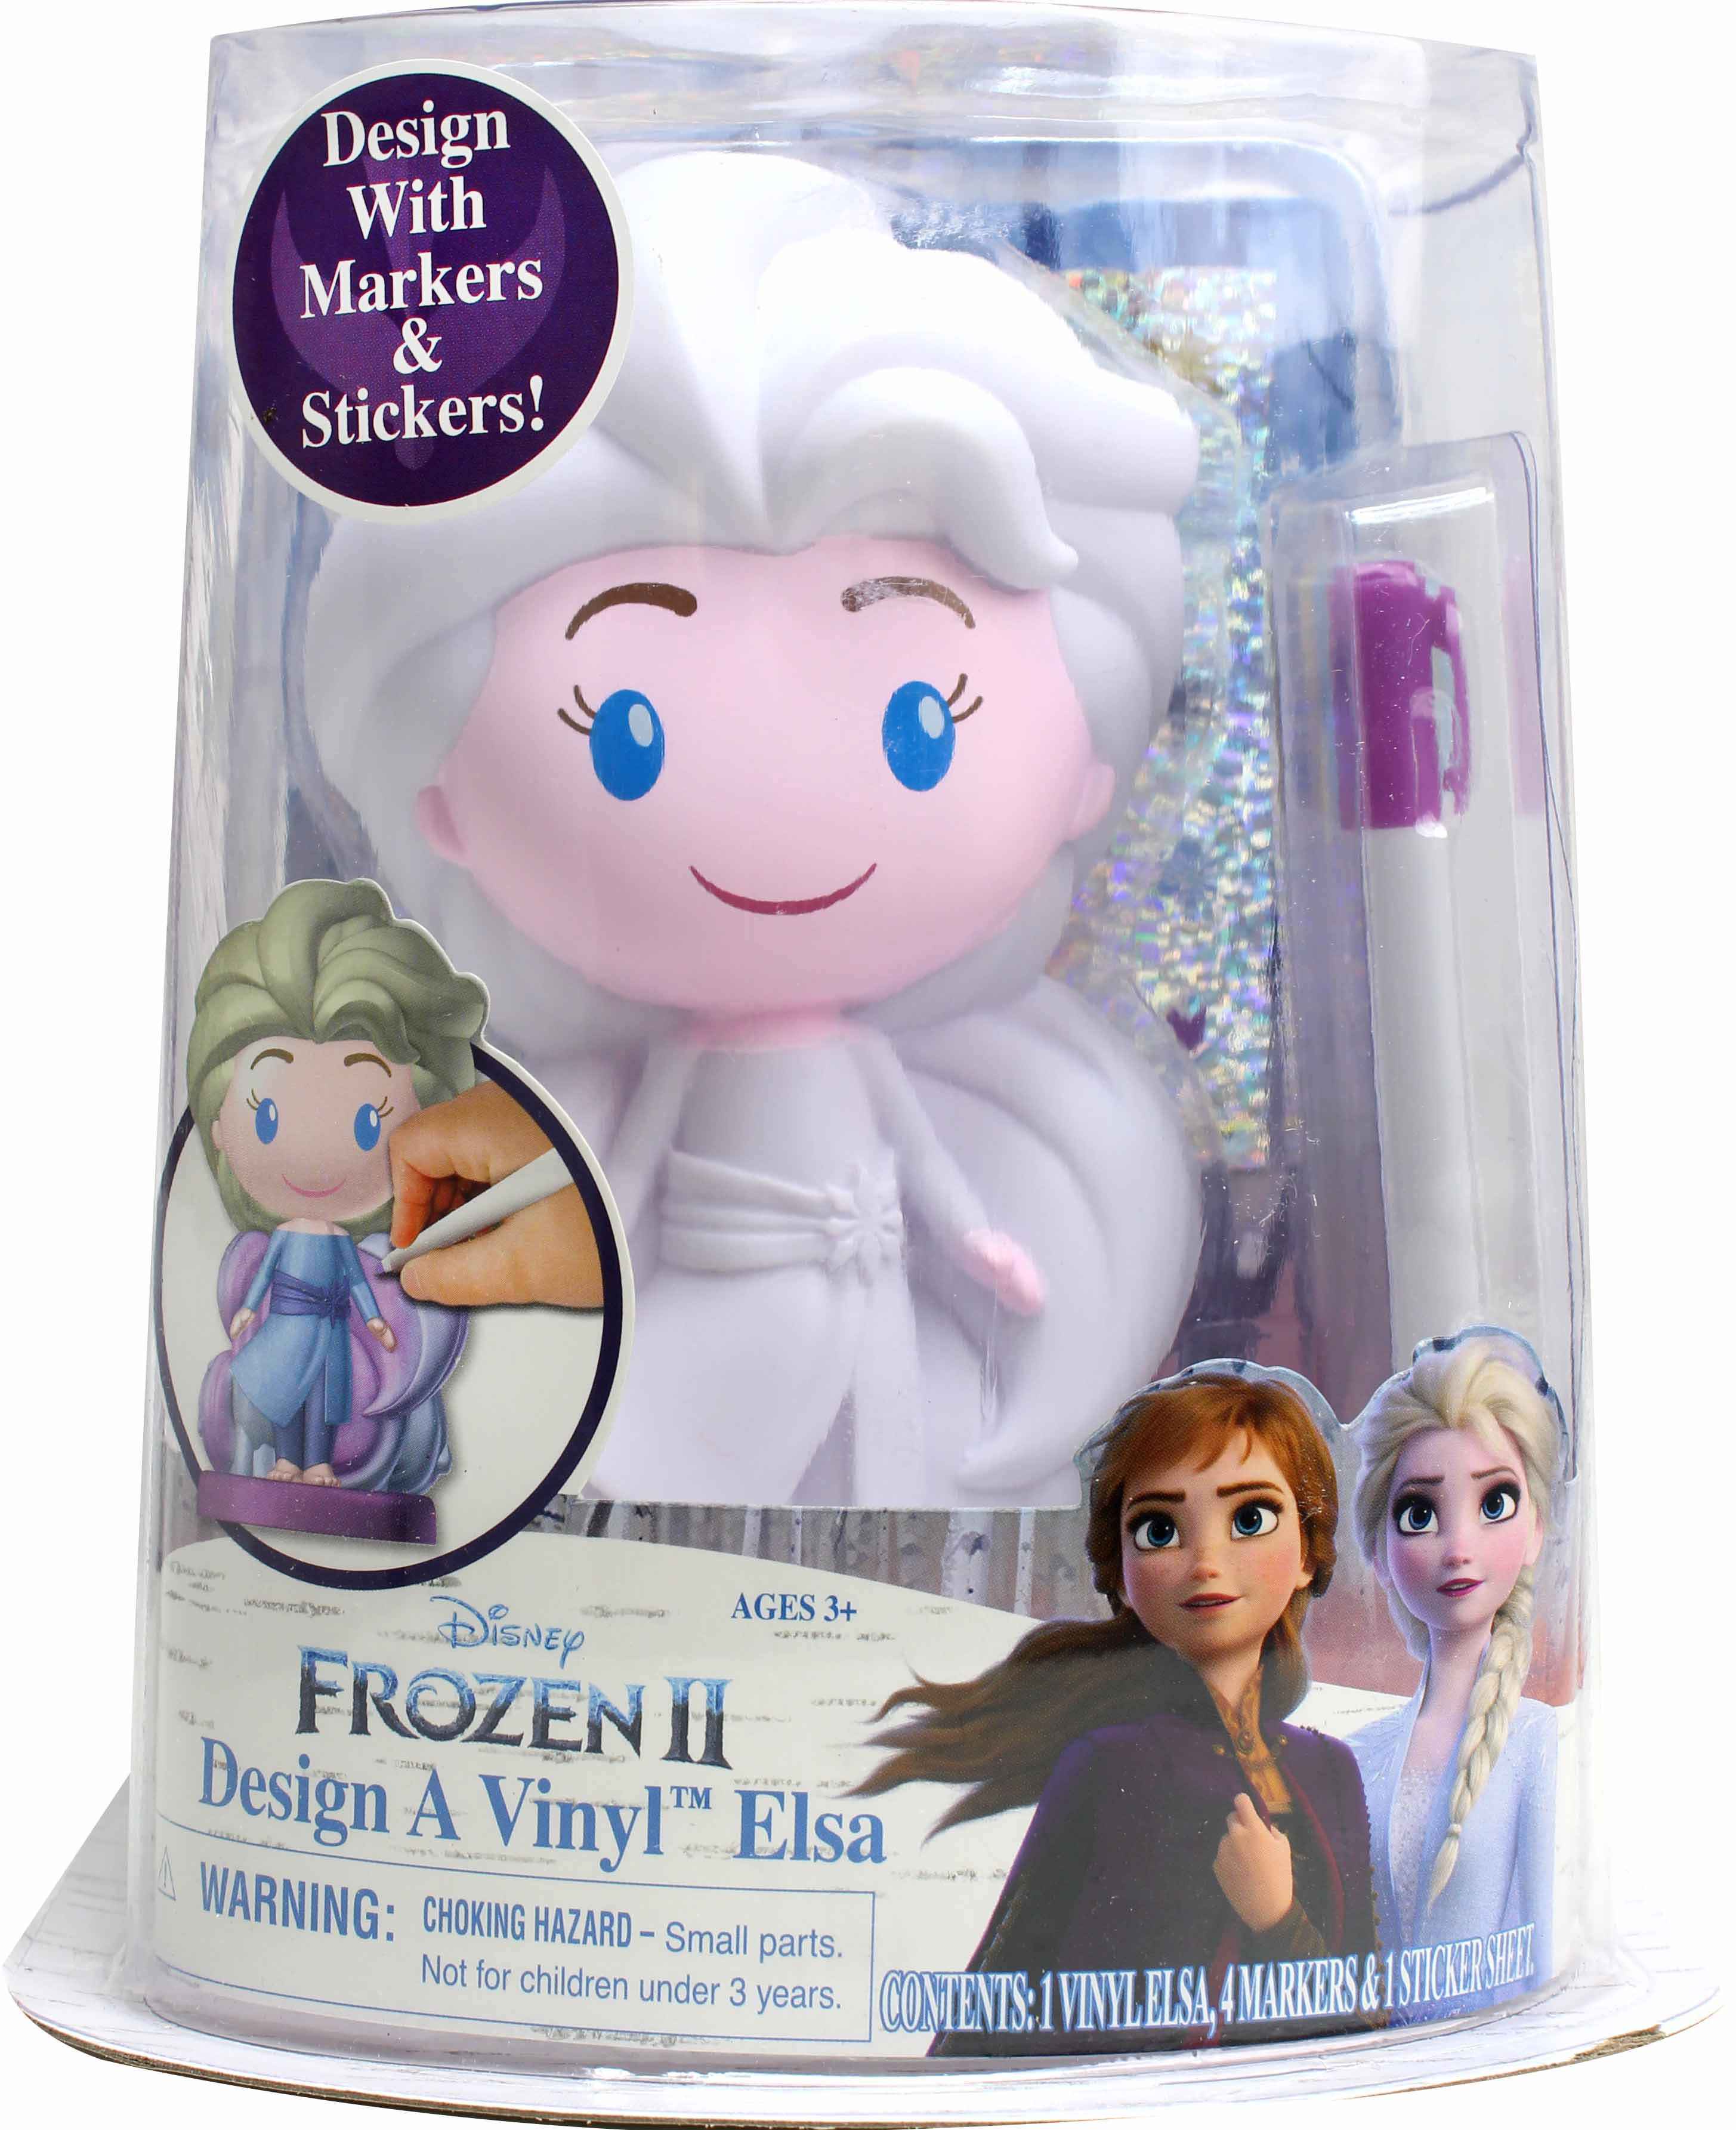 Frozen 2 Design a Vinyl Craft Set w/ Markers & Stickers - Elsa - image 1 of 3